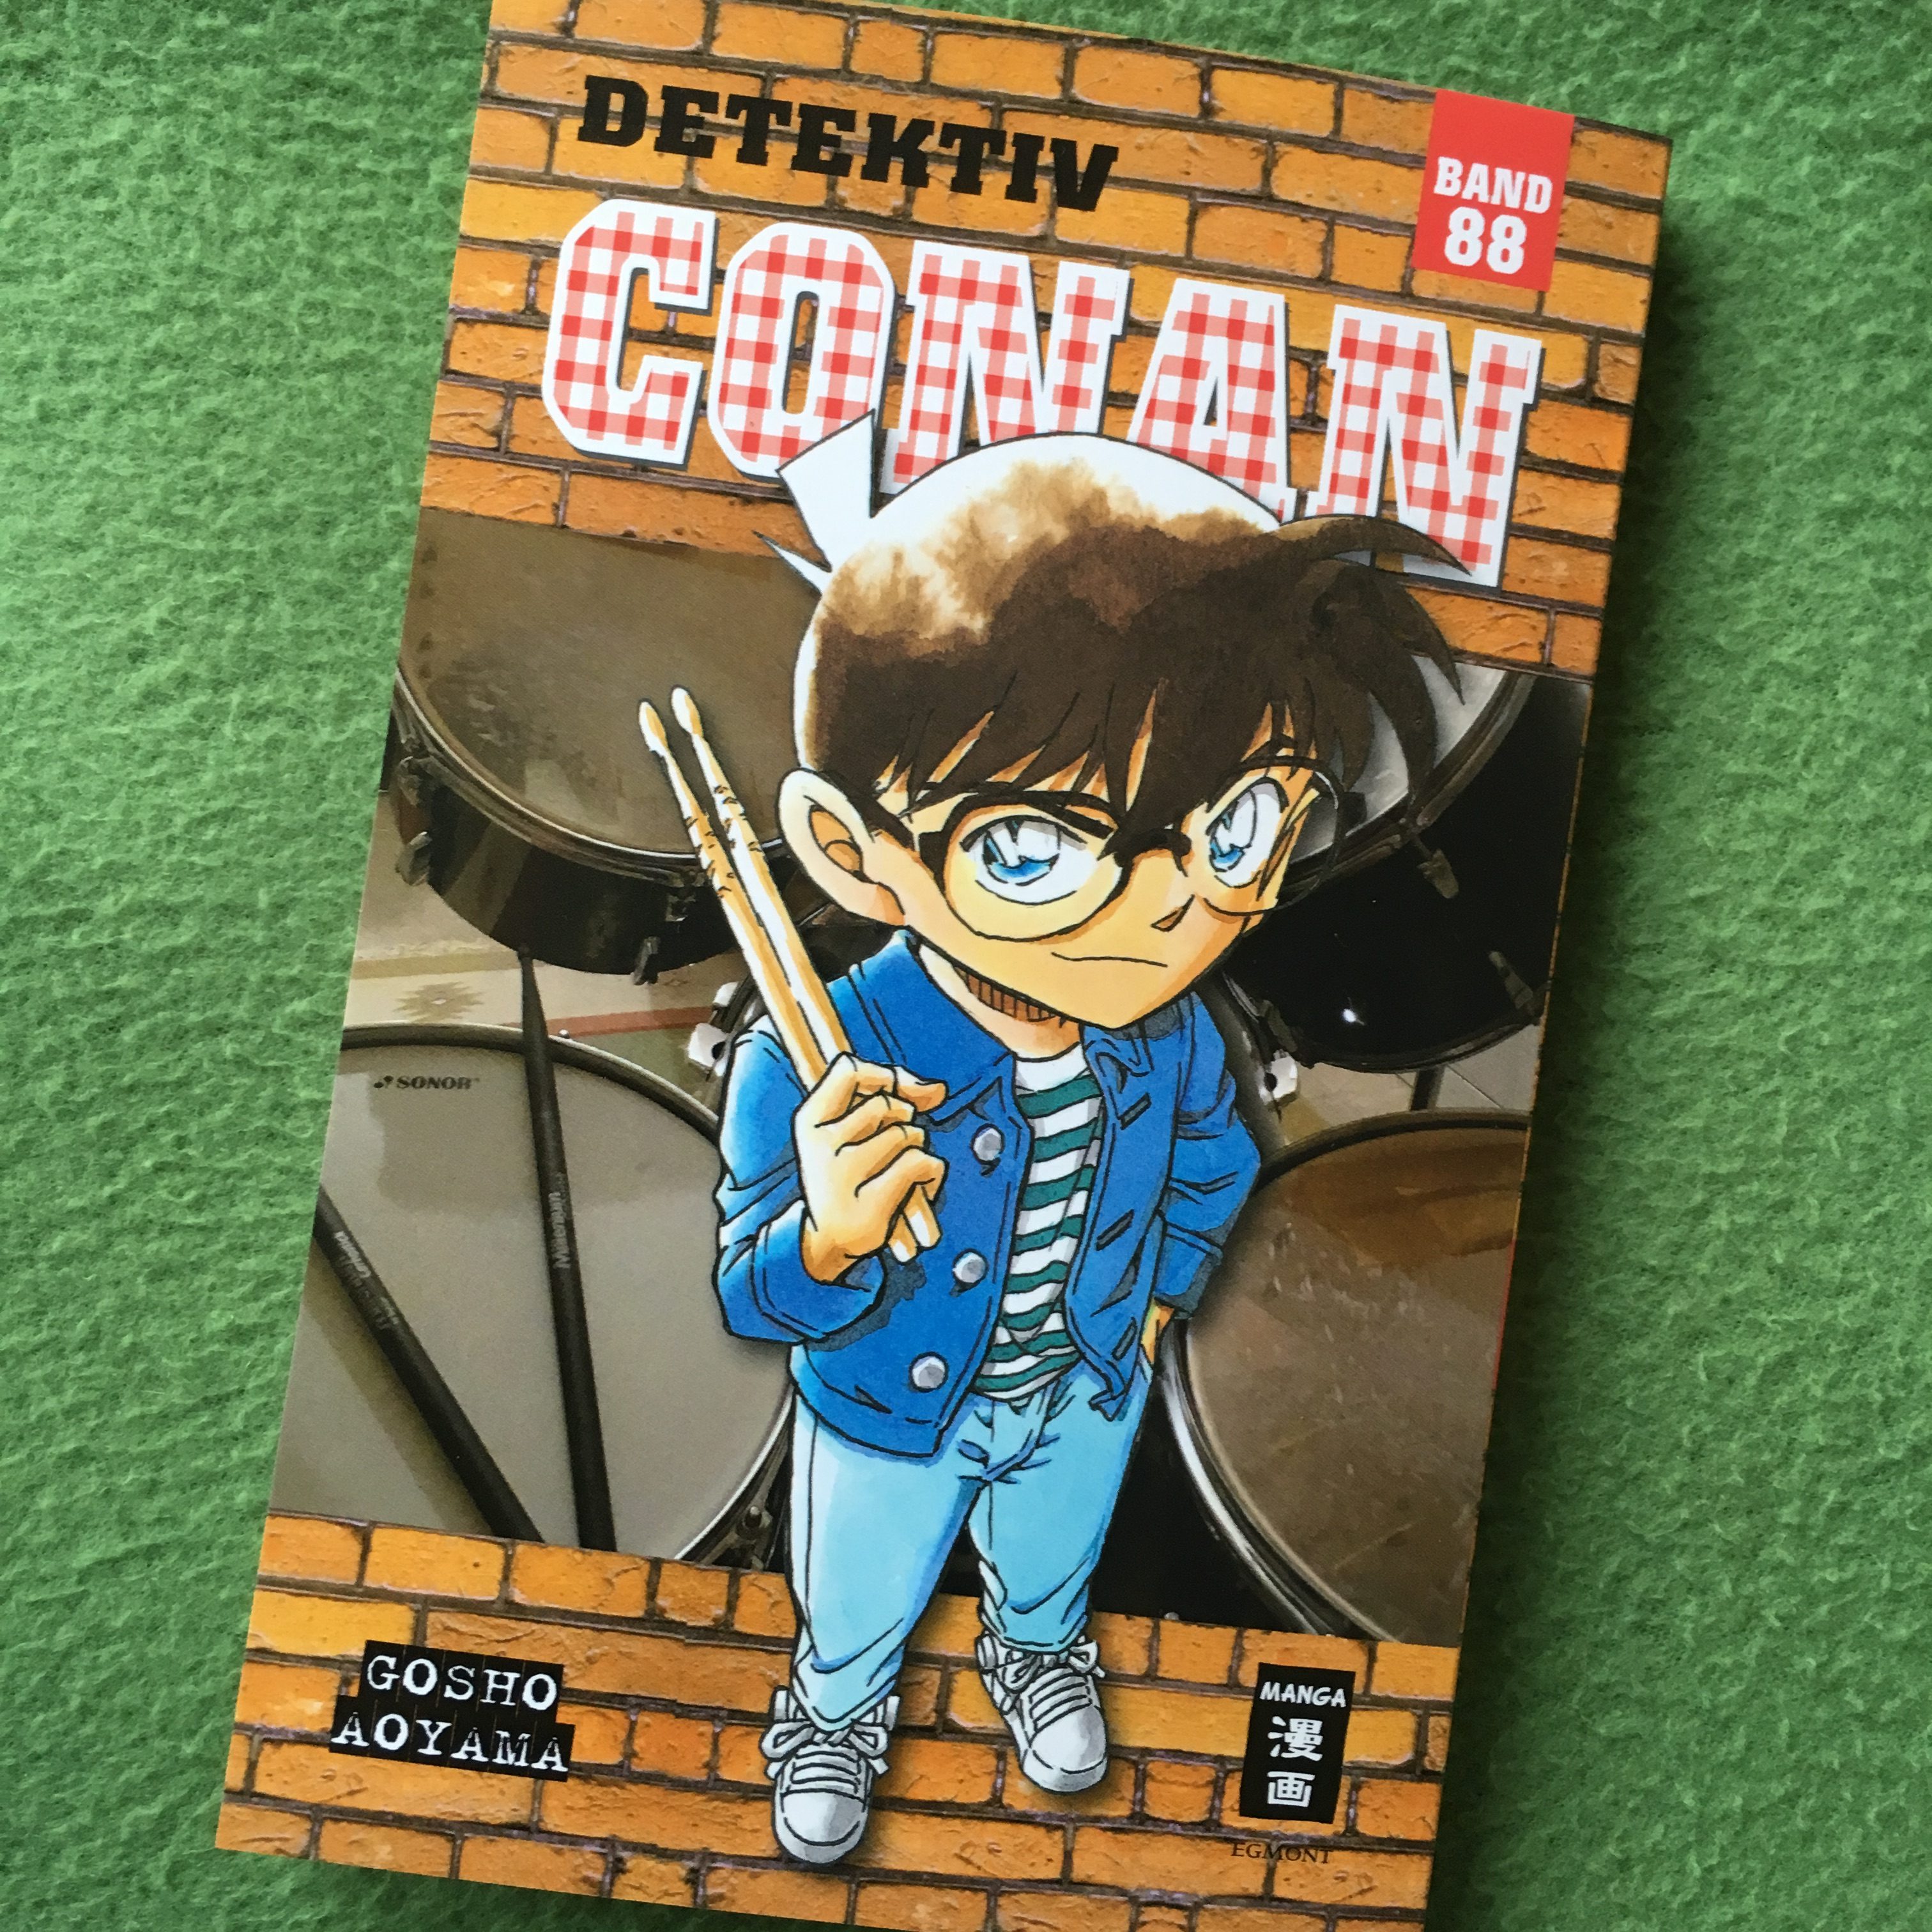 Detektiv Conan Band 88